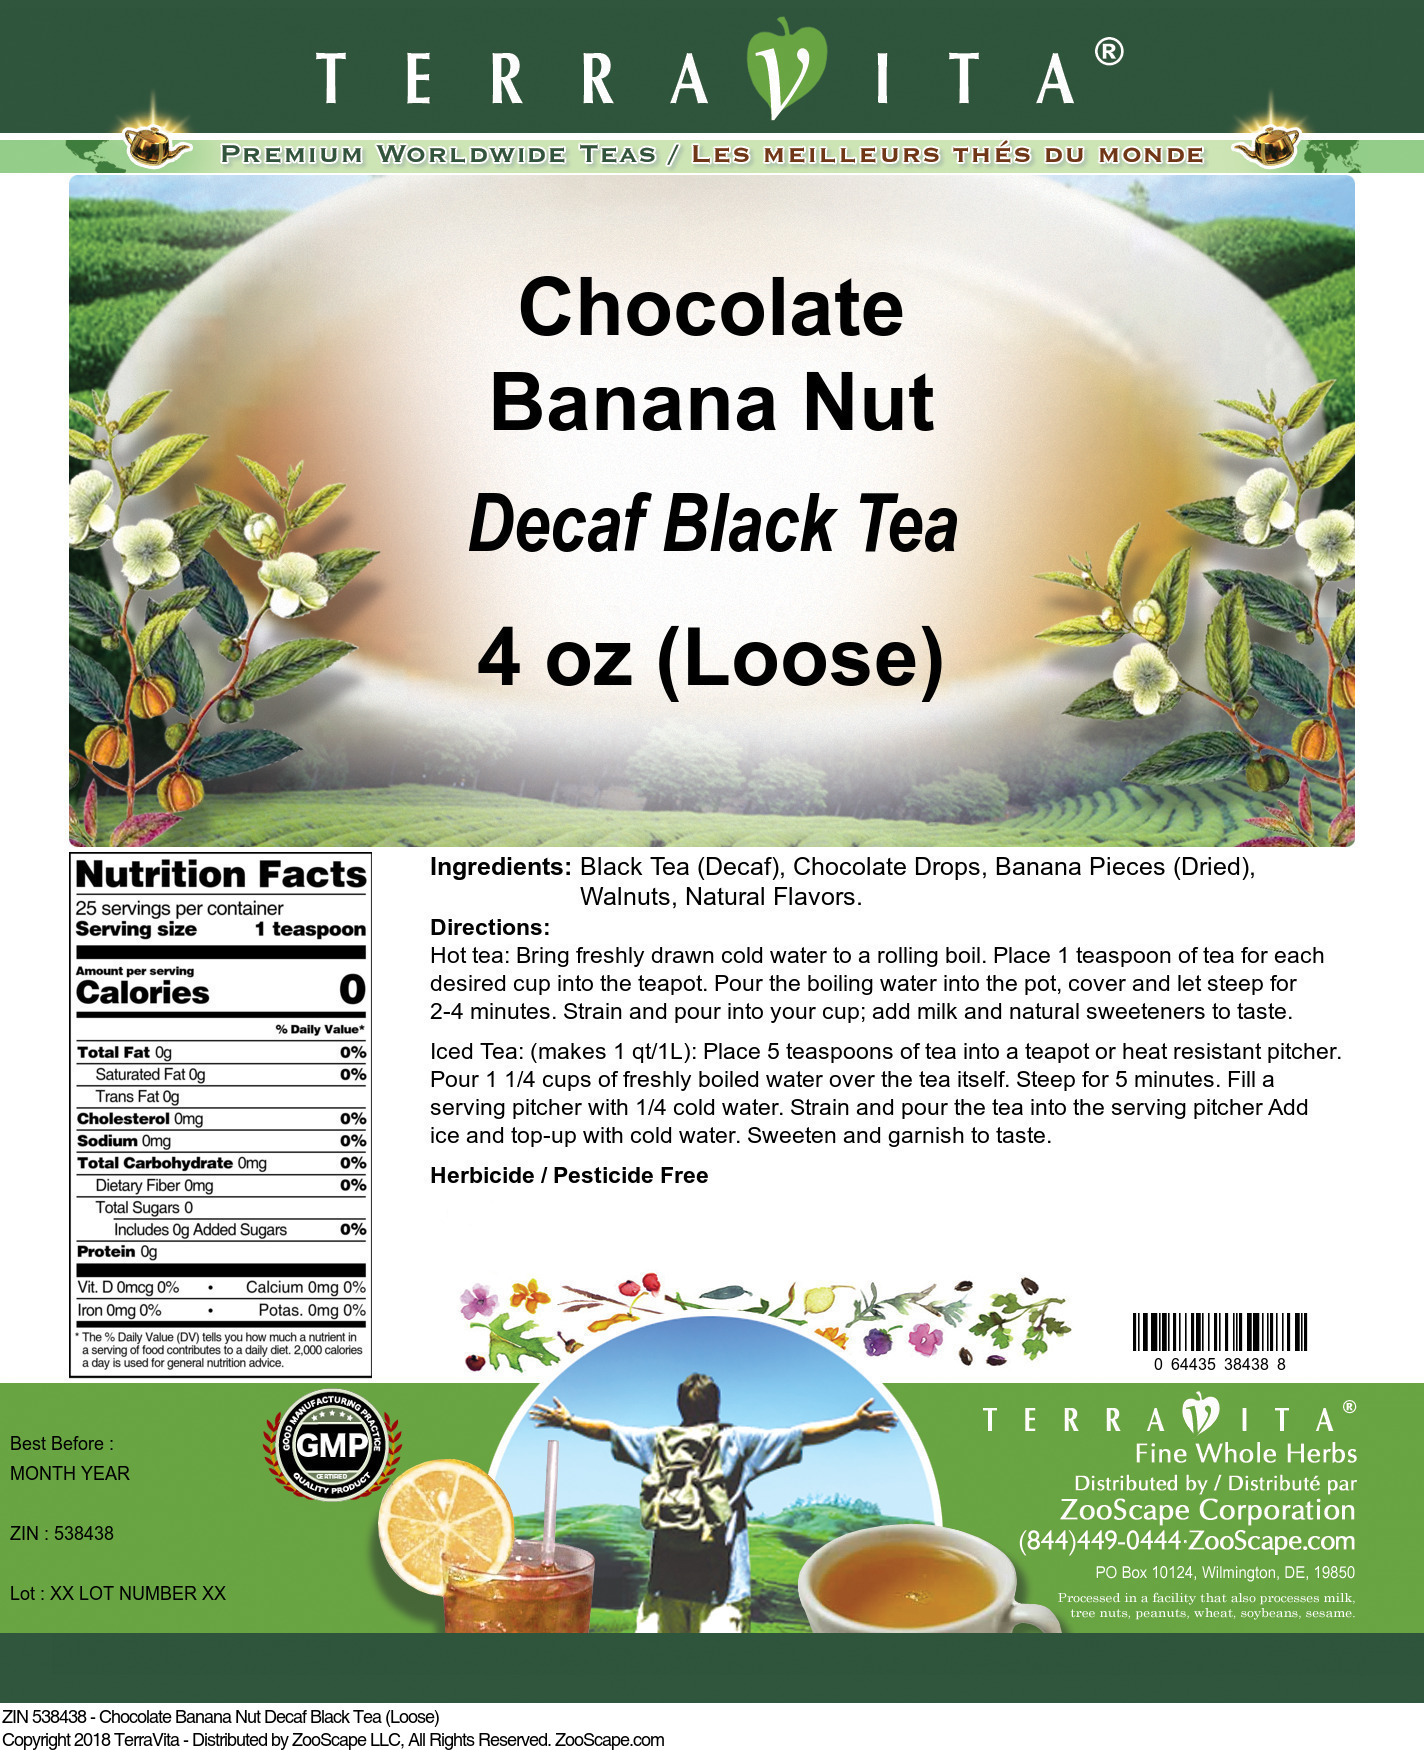 Chocolate Banana Nut Decaf Black Tea (Loose) - Label